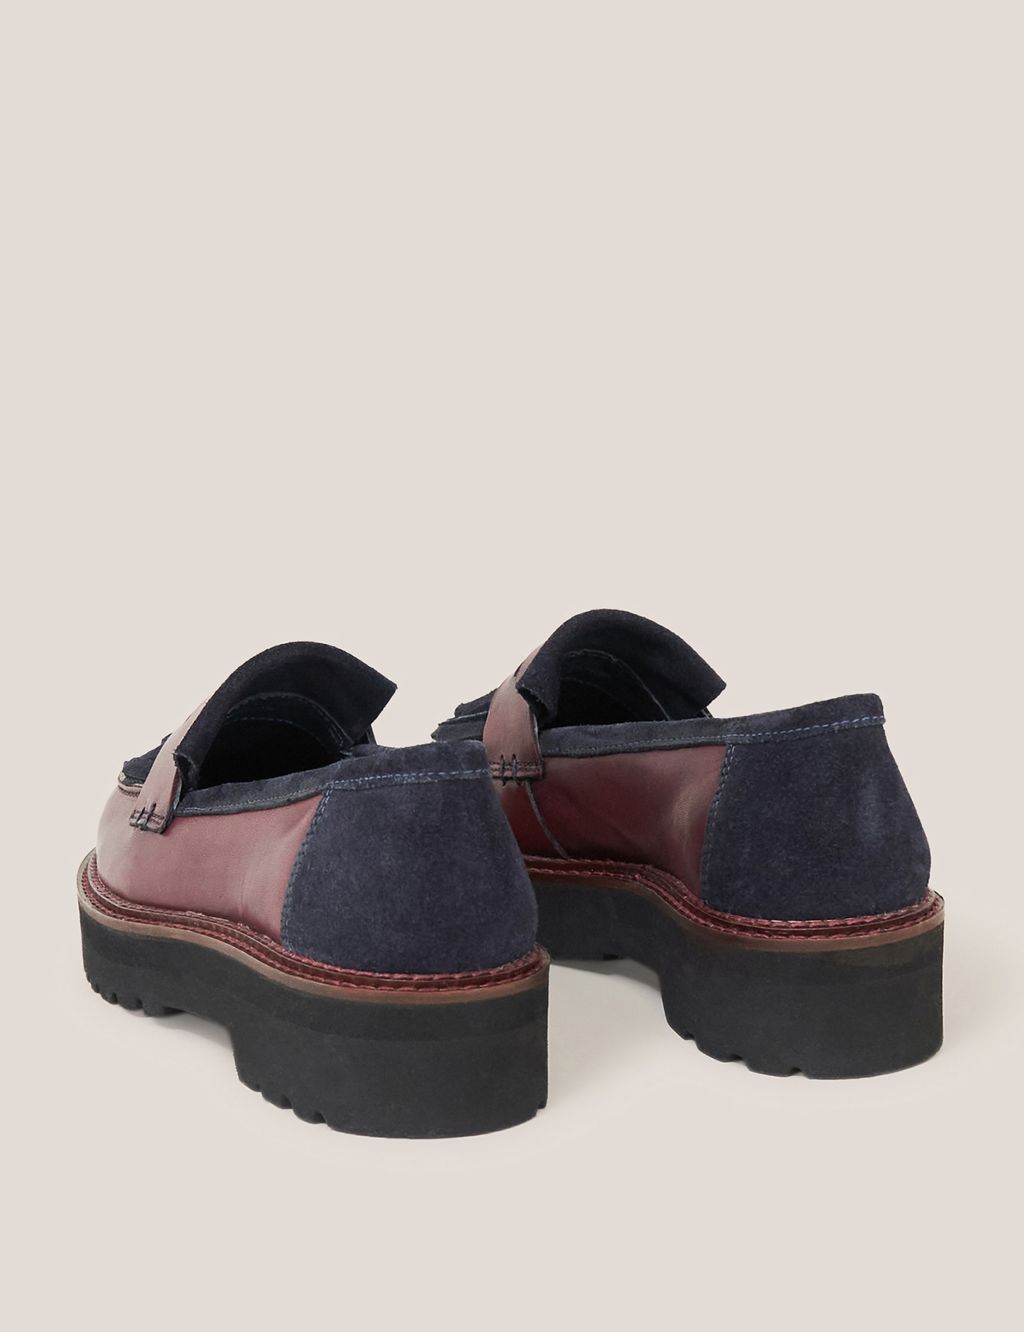 Leather Flatform Loafers image 4